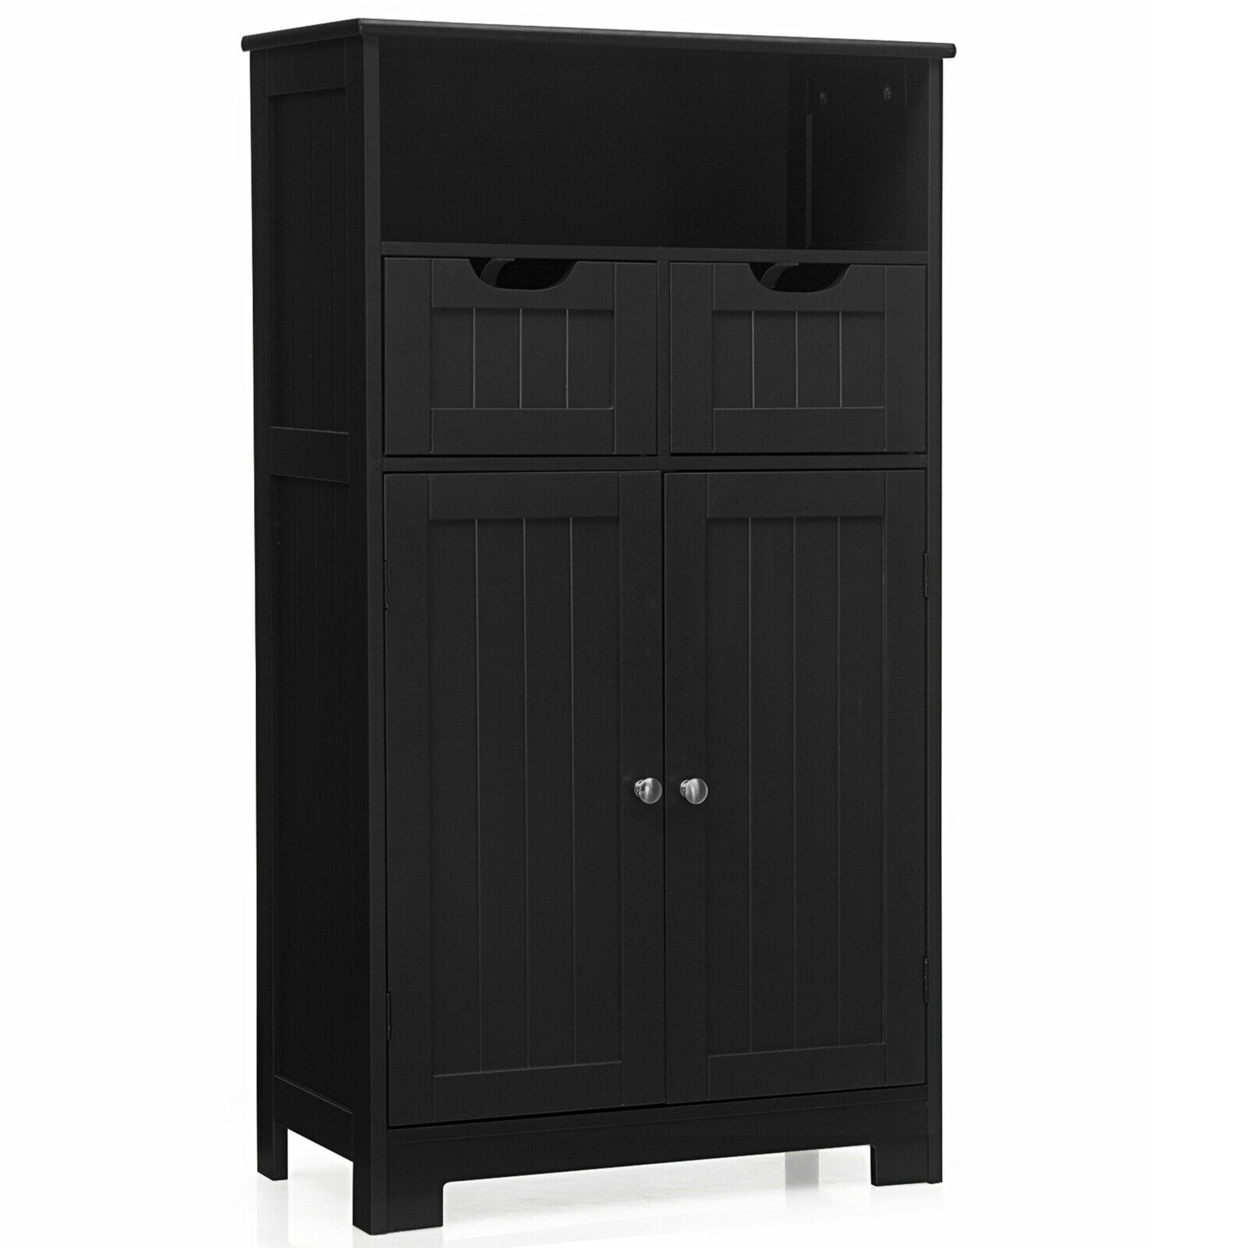 Bathroom Floor Cabinet Wooden Storage Organizer W/Drawer Doors - Black